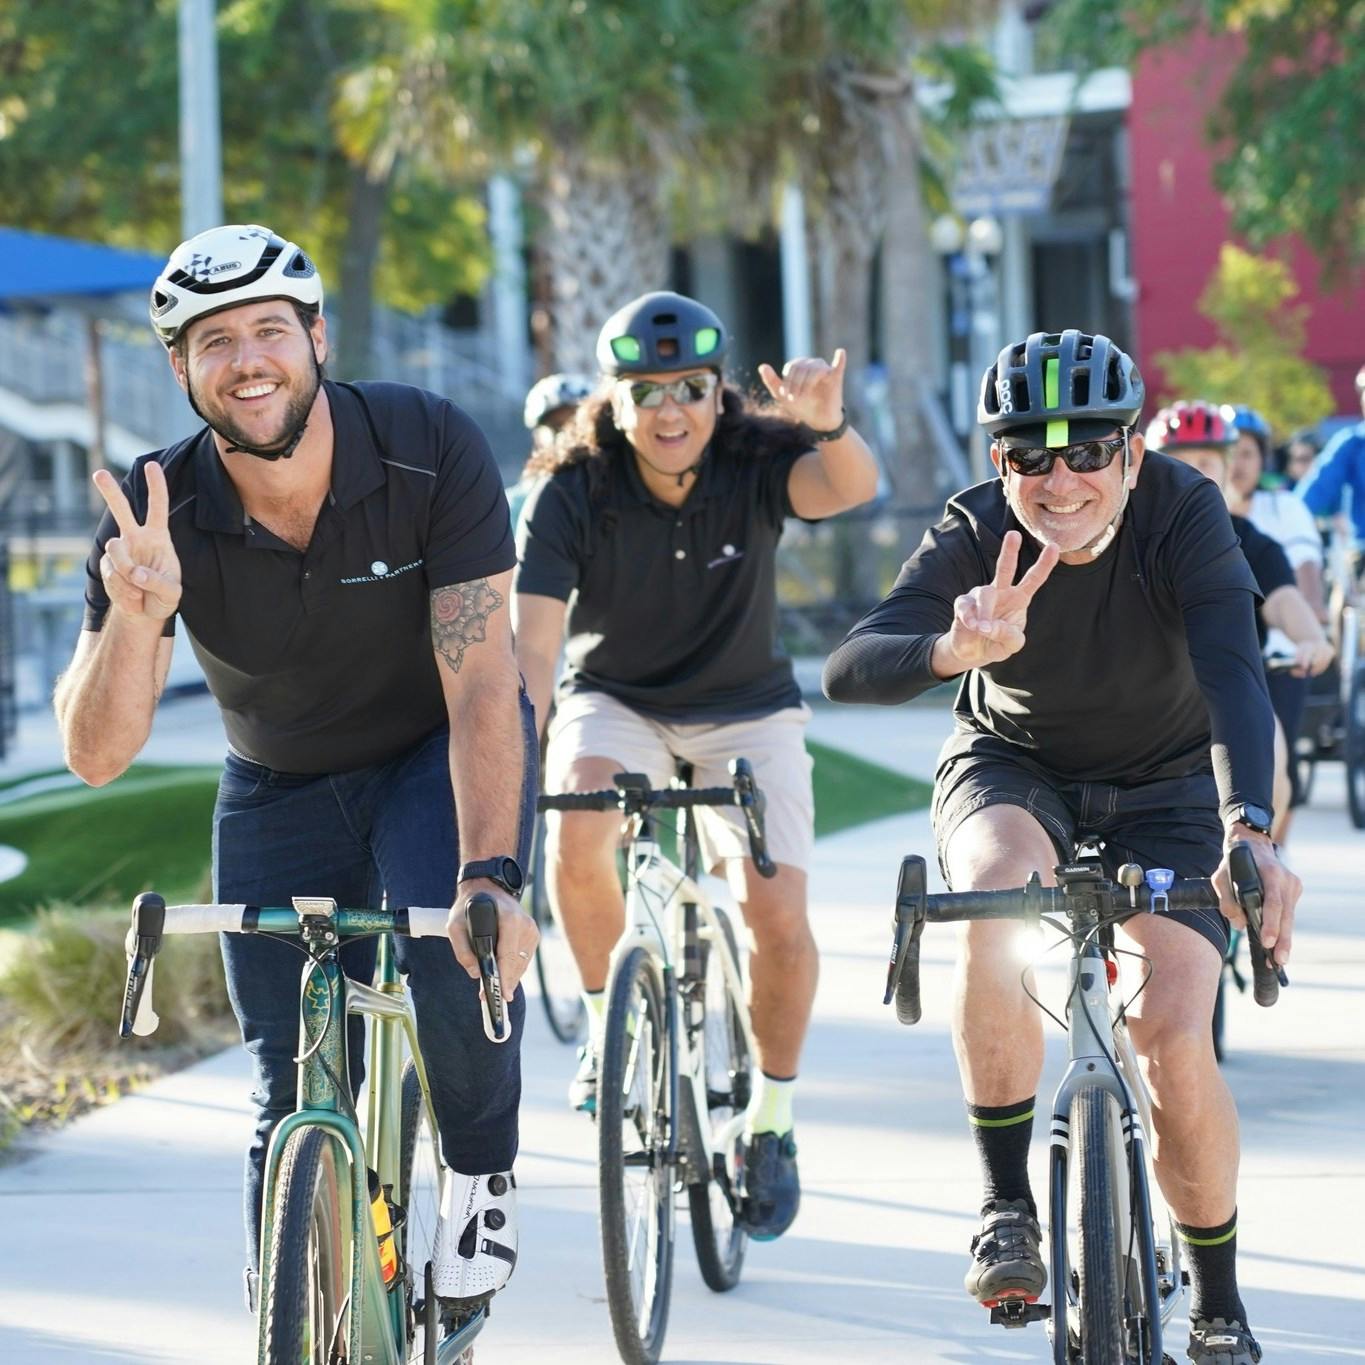 City of Orlando's 2023 Bike to Work Day thumbnail image.